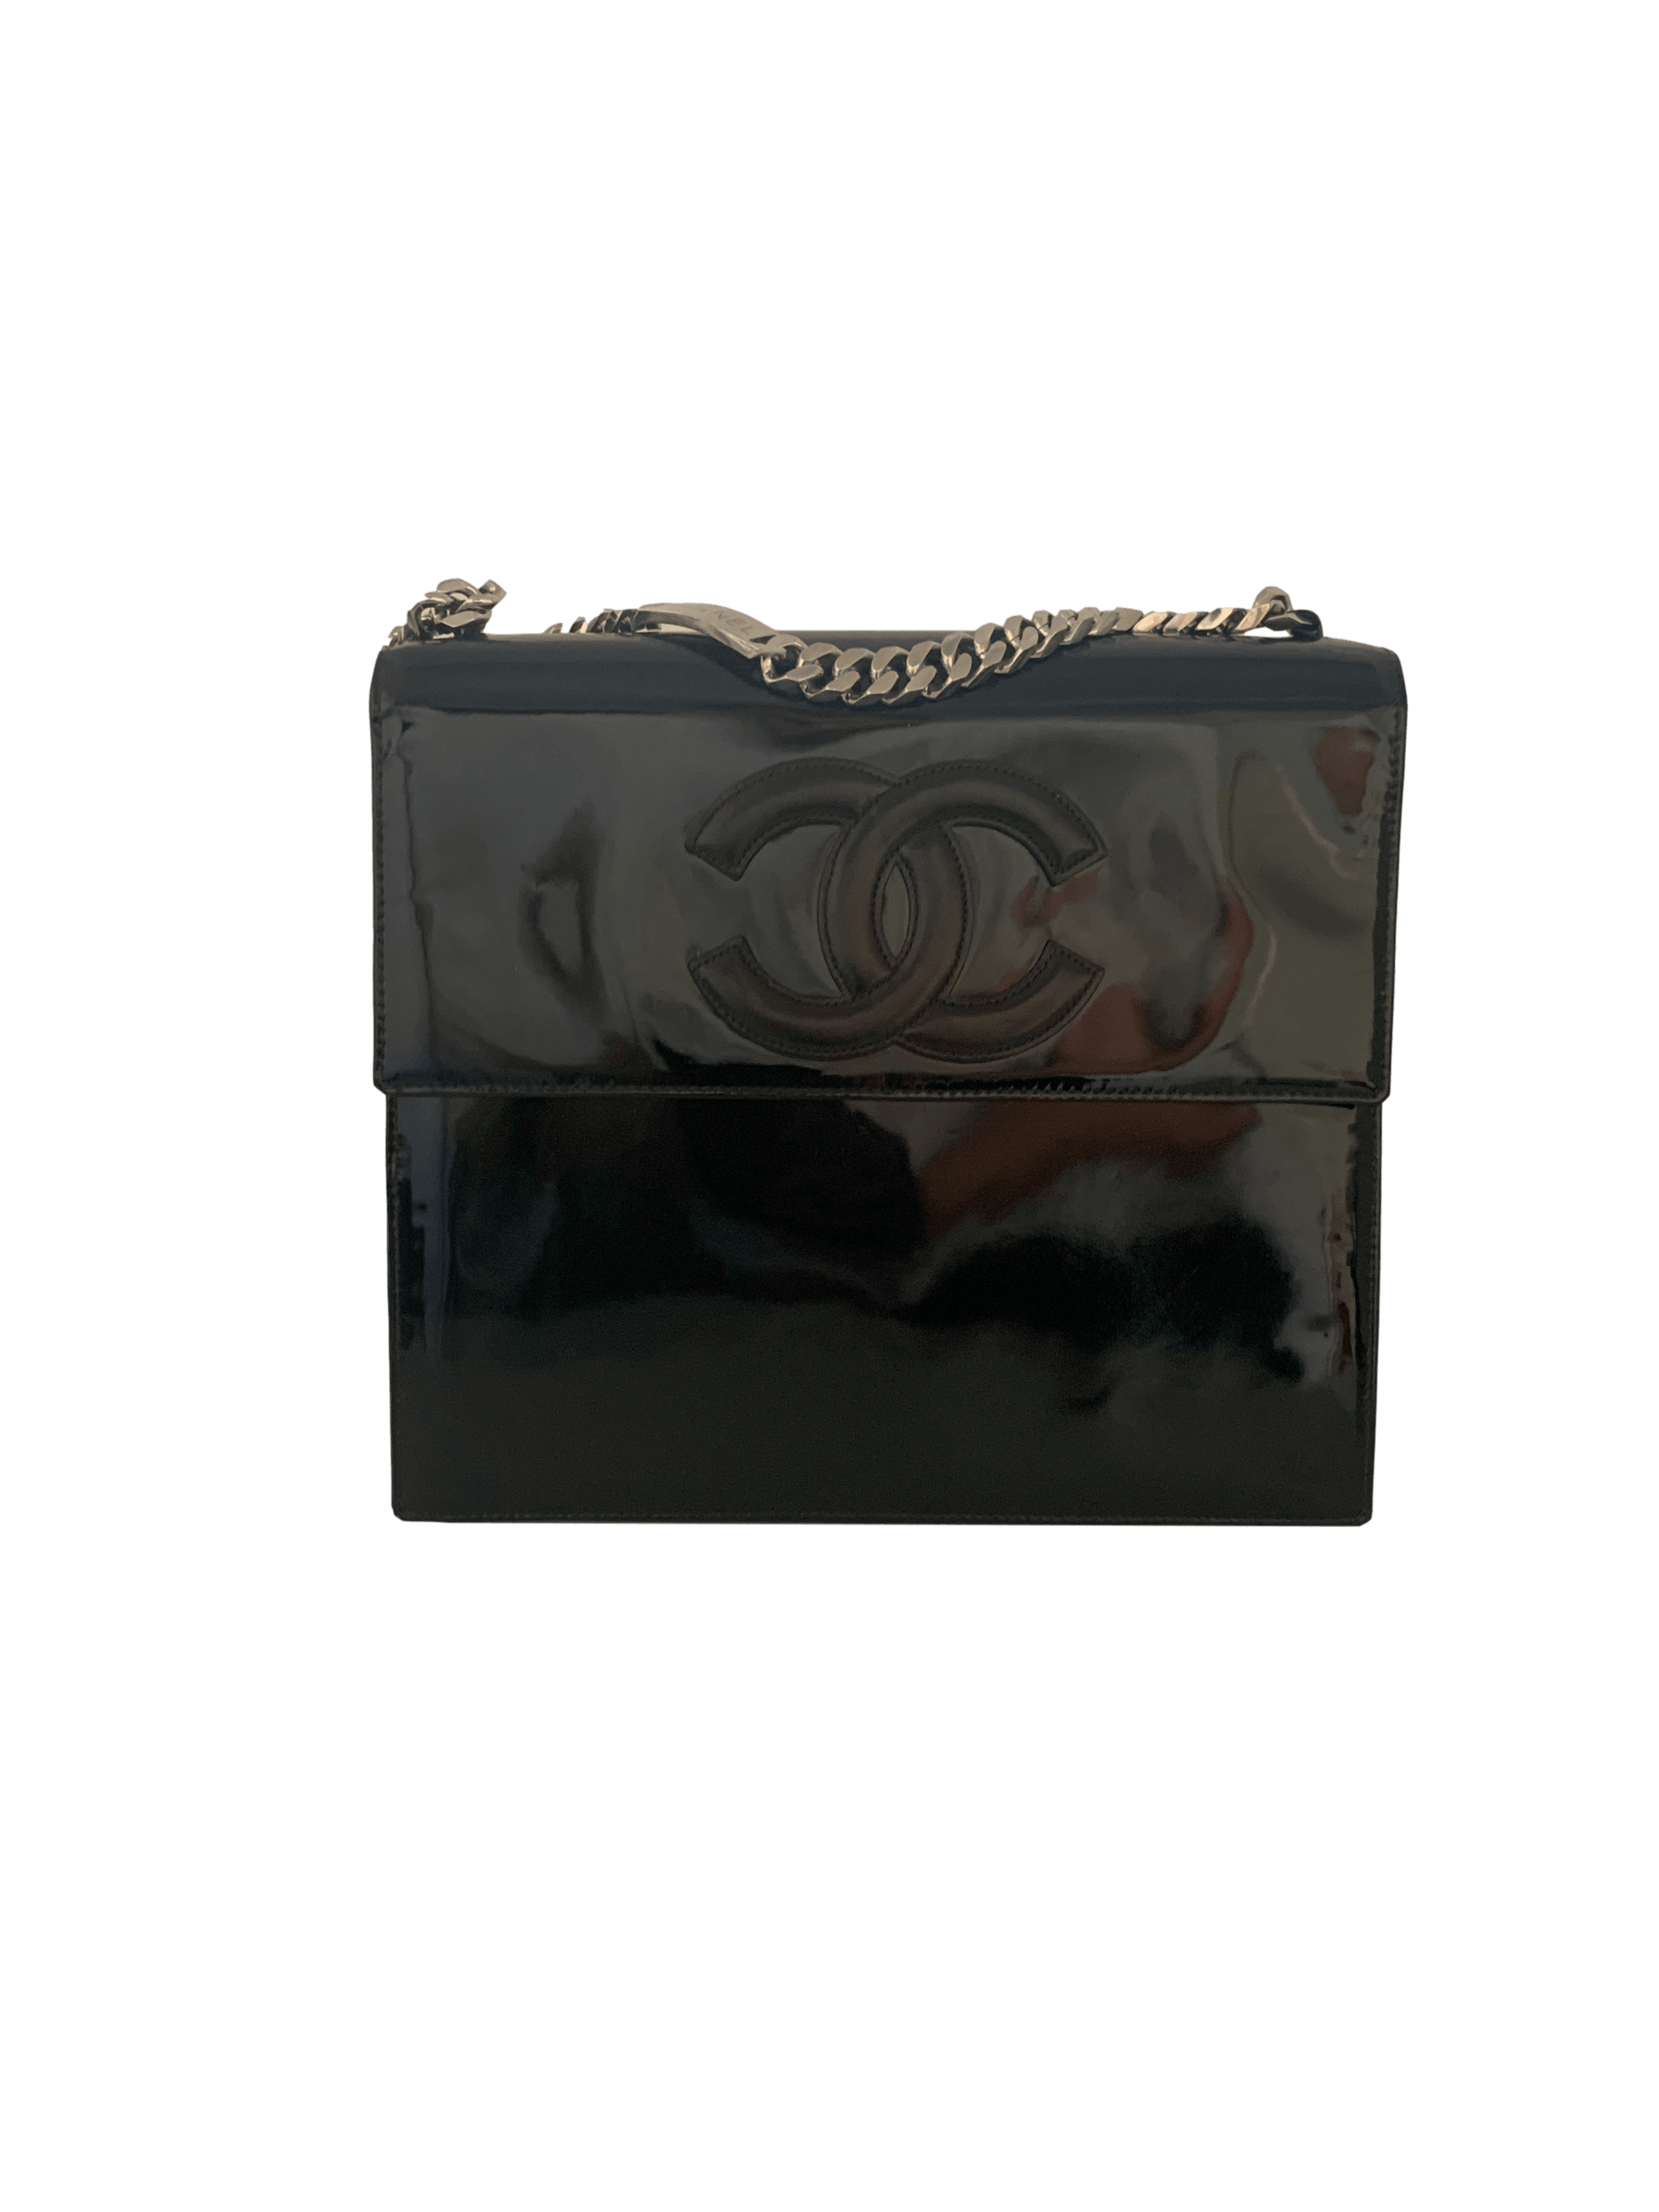 Chanel Black Patent Top Chain Bag - Handbags